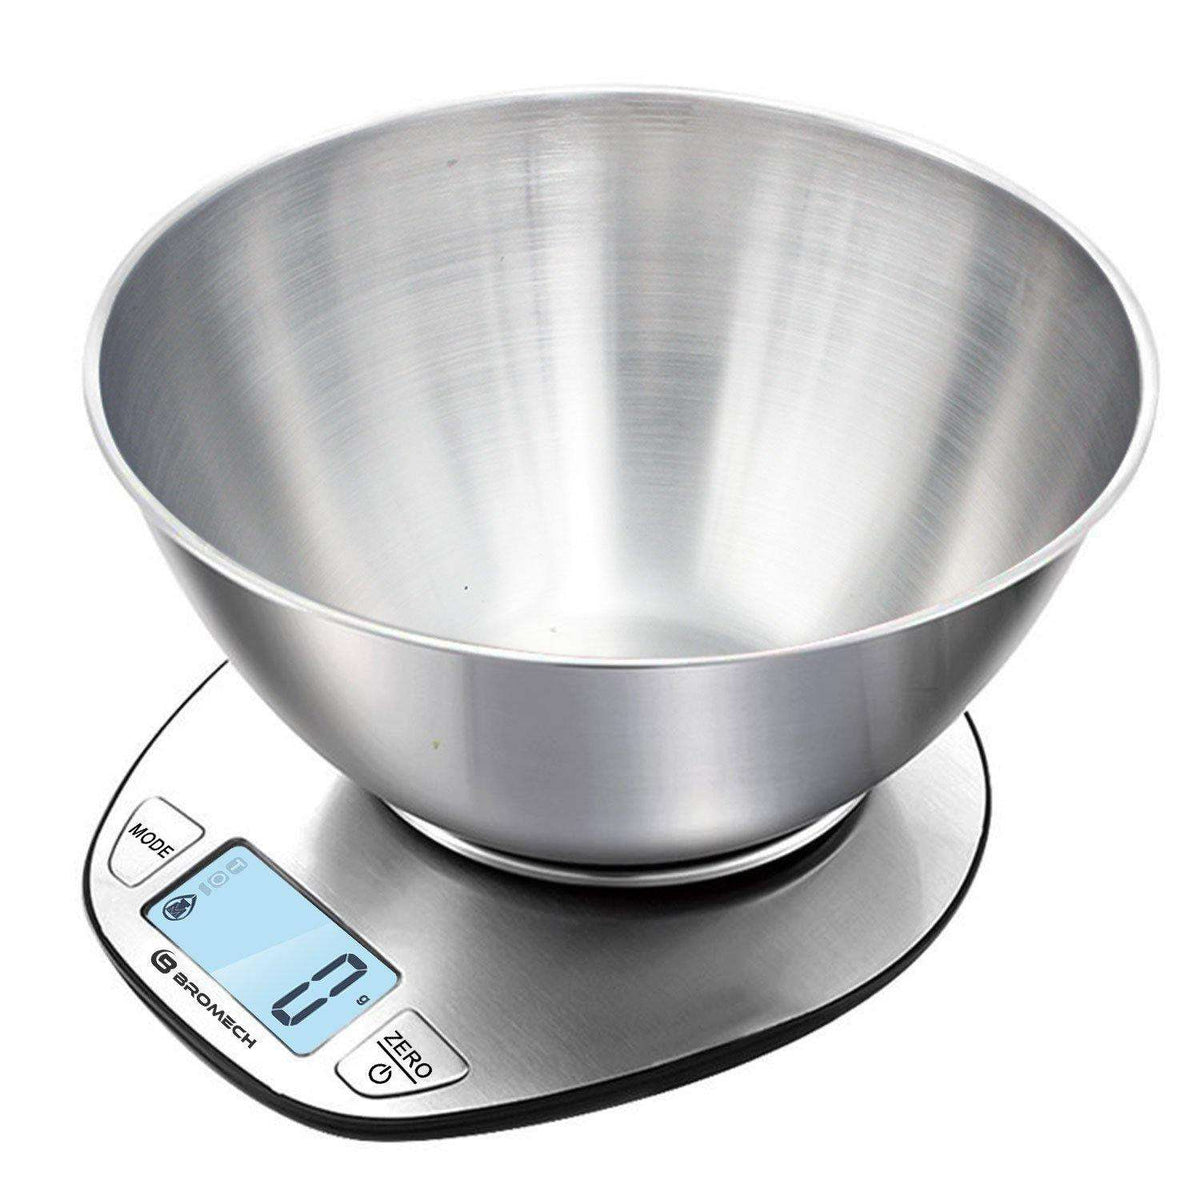 LCD Digital Kitchen Scale Diet Food Balance 5KG 11LBS Bowl Weight HxExO 